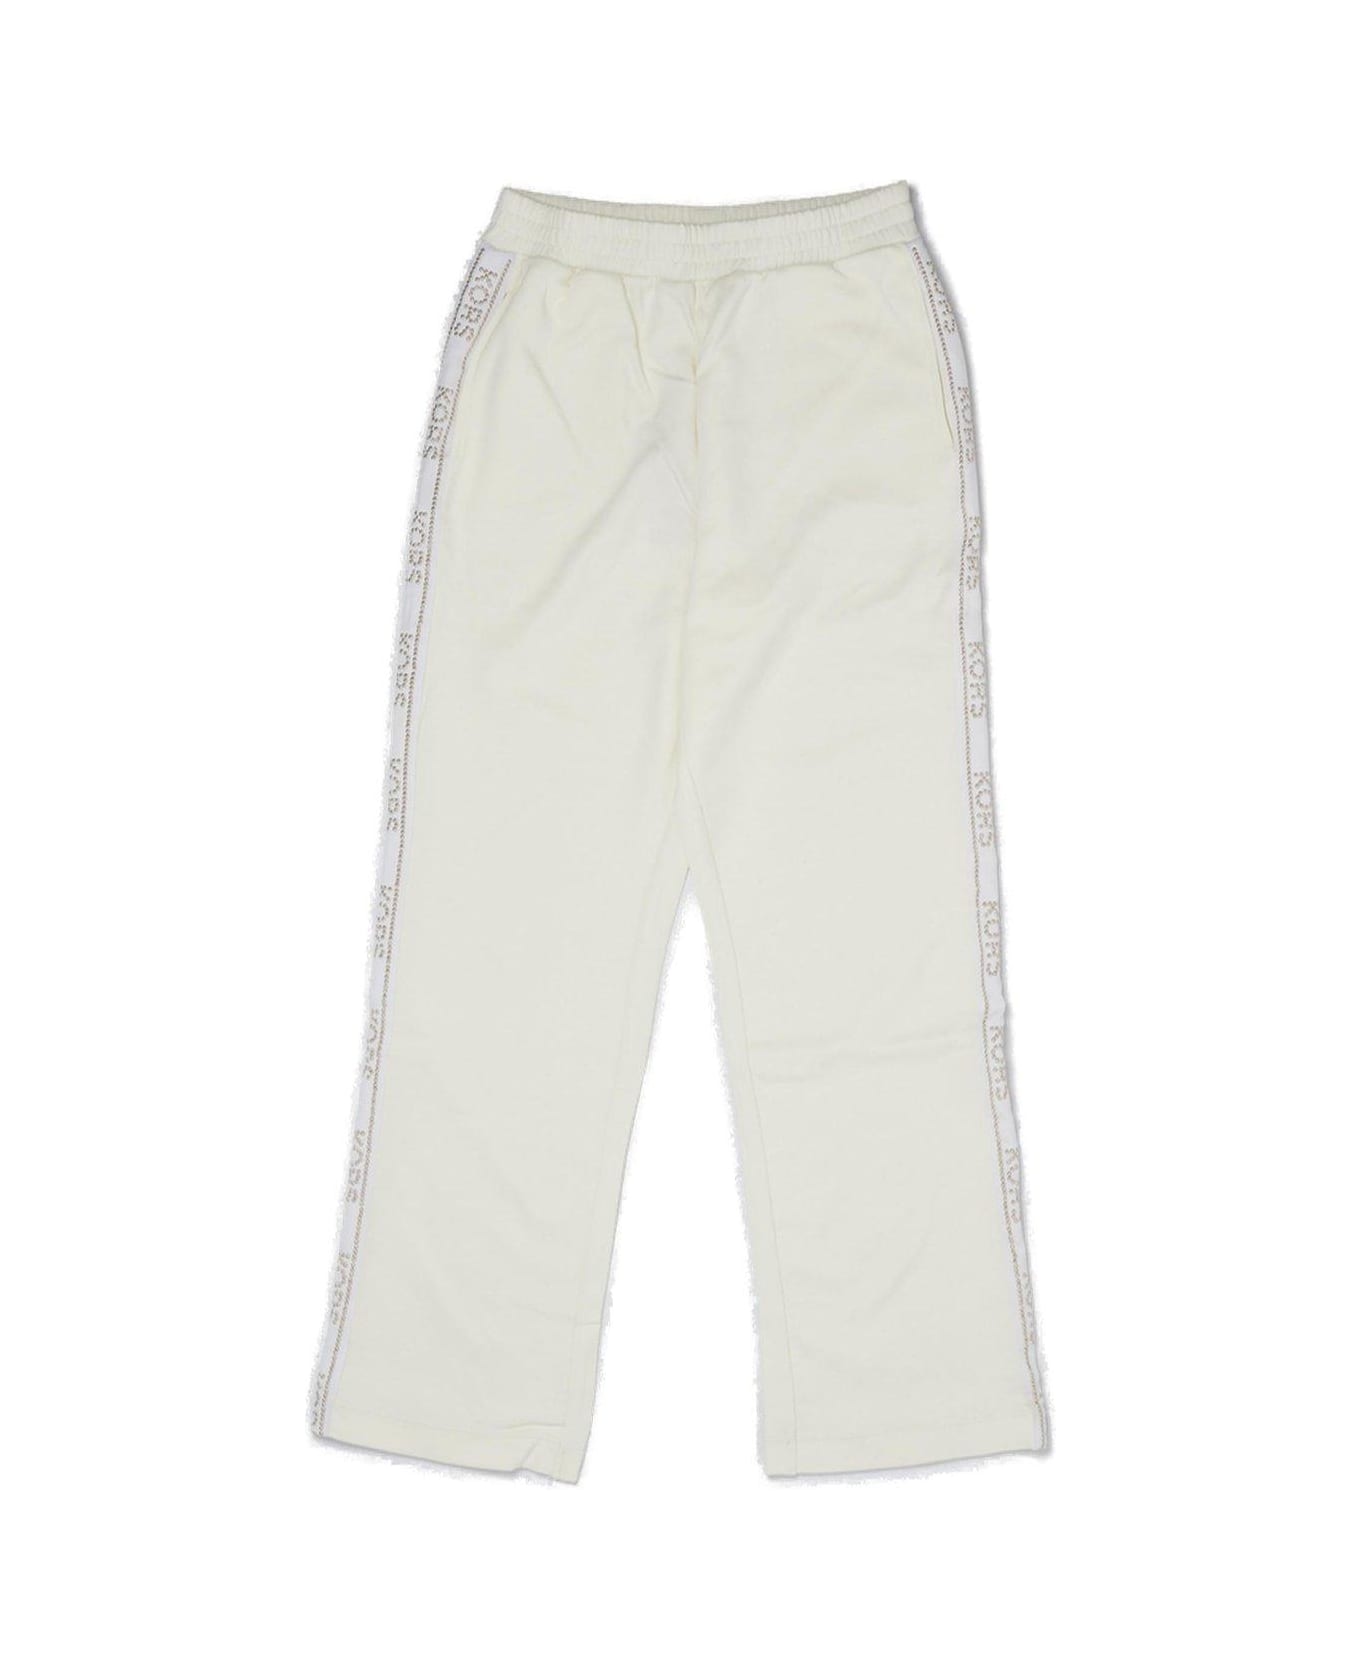 Michael Kors Stud Embellished Jogging Trousers - Crema ボトムス